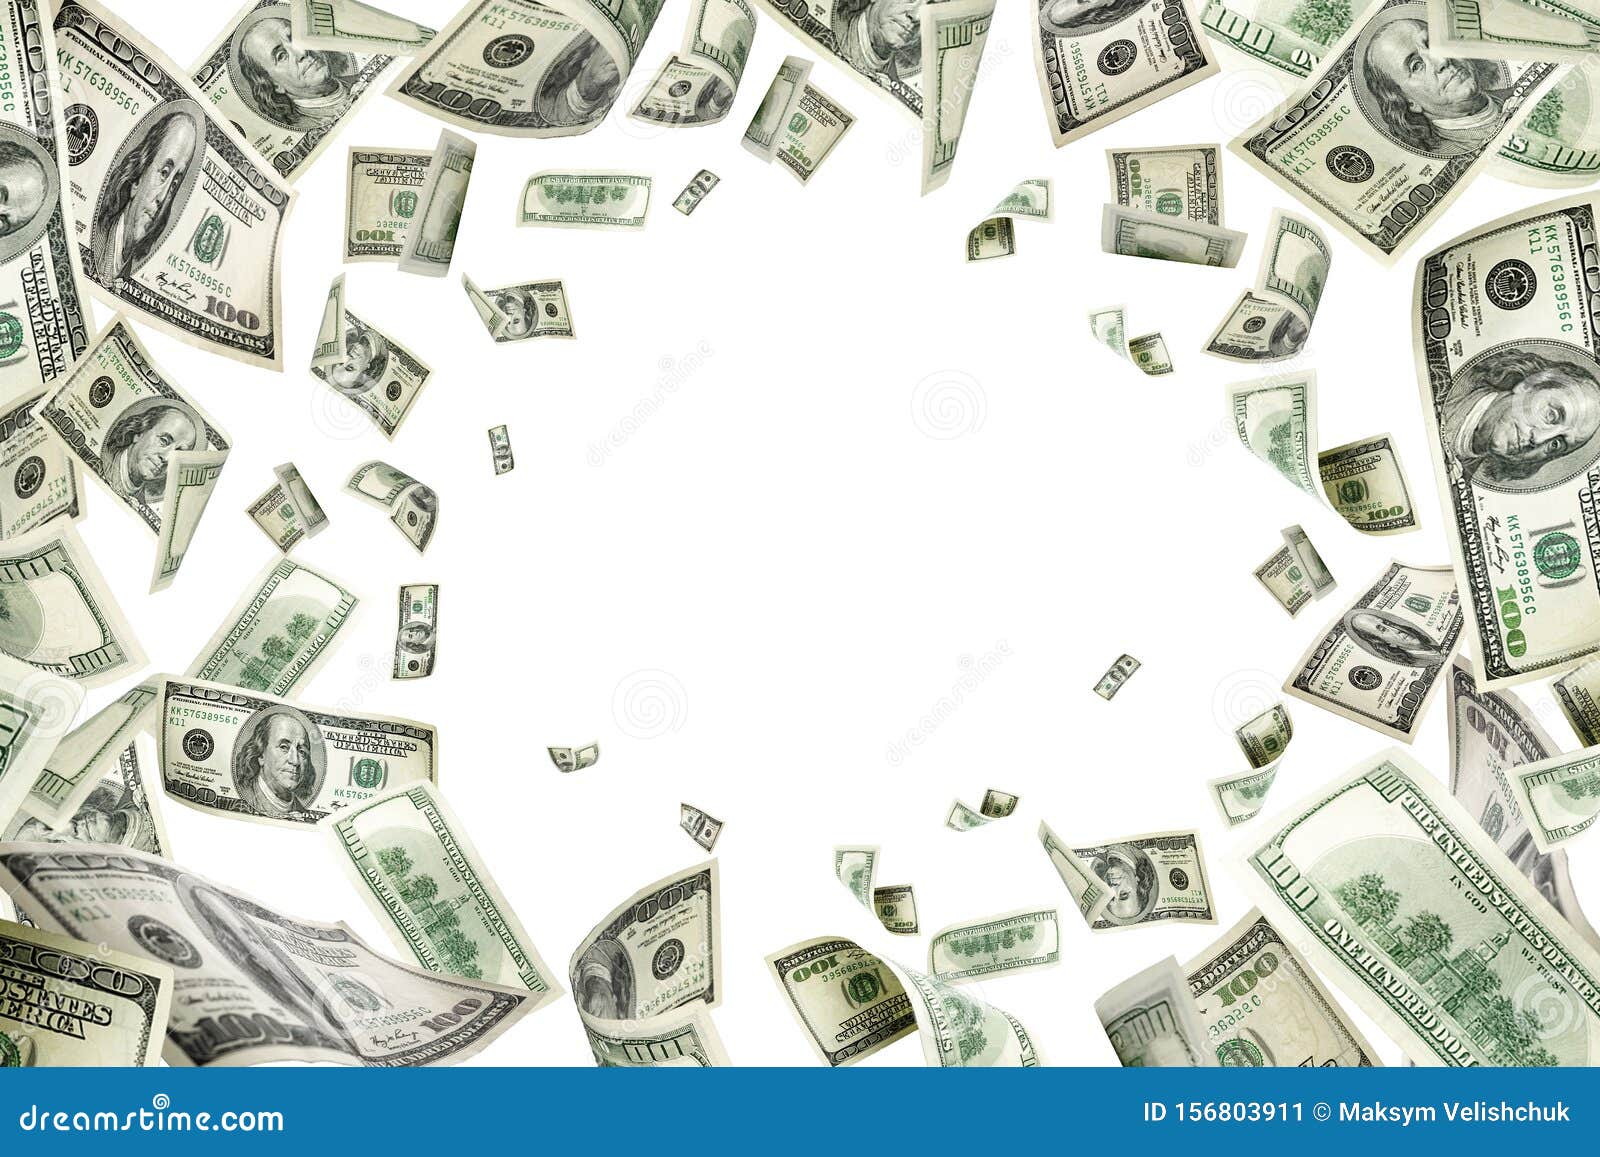 Dollar Sign American Money Cash Background Us Bill Money Fal Stock Image Image Of Bucks Contract